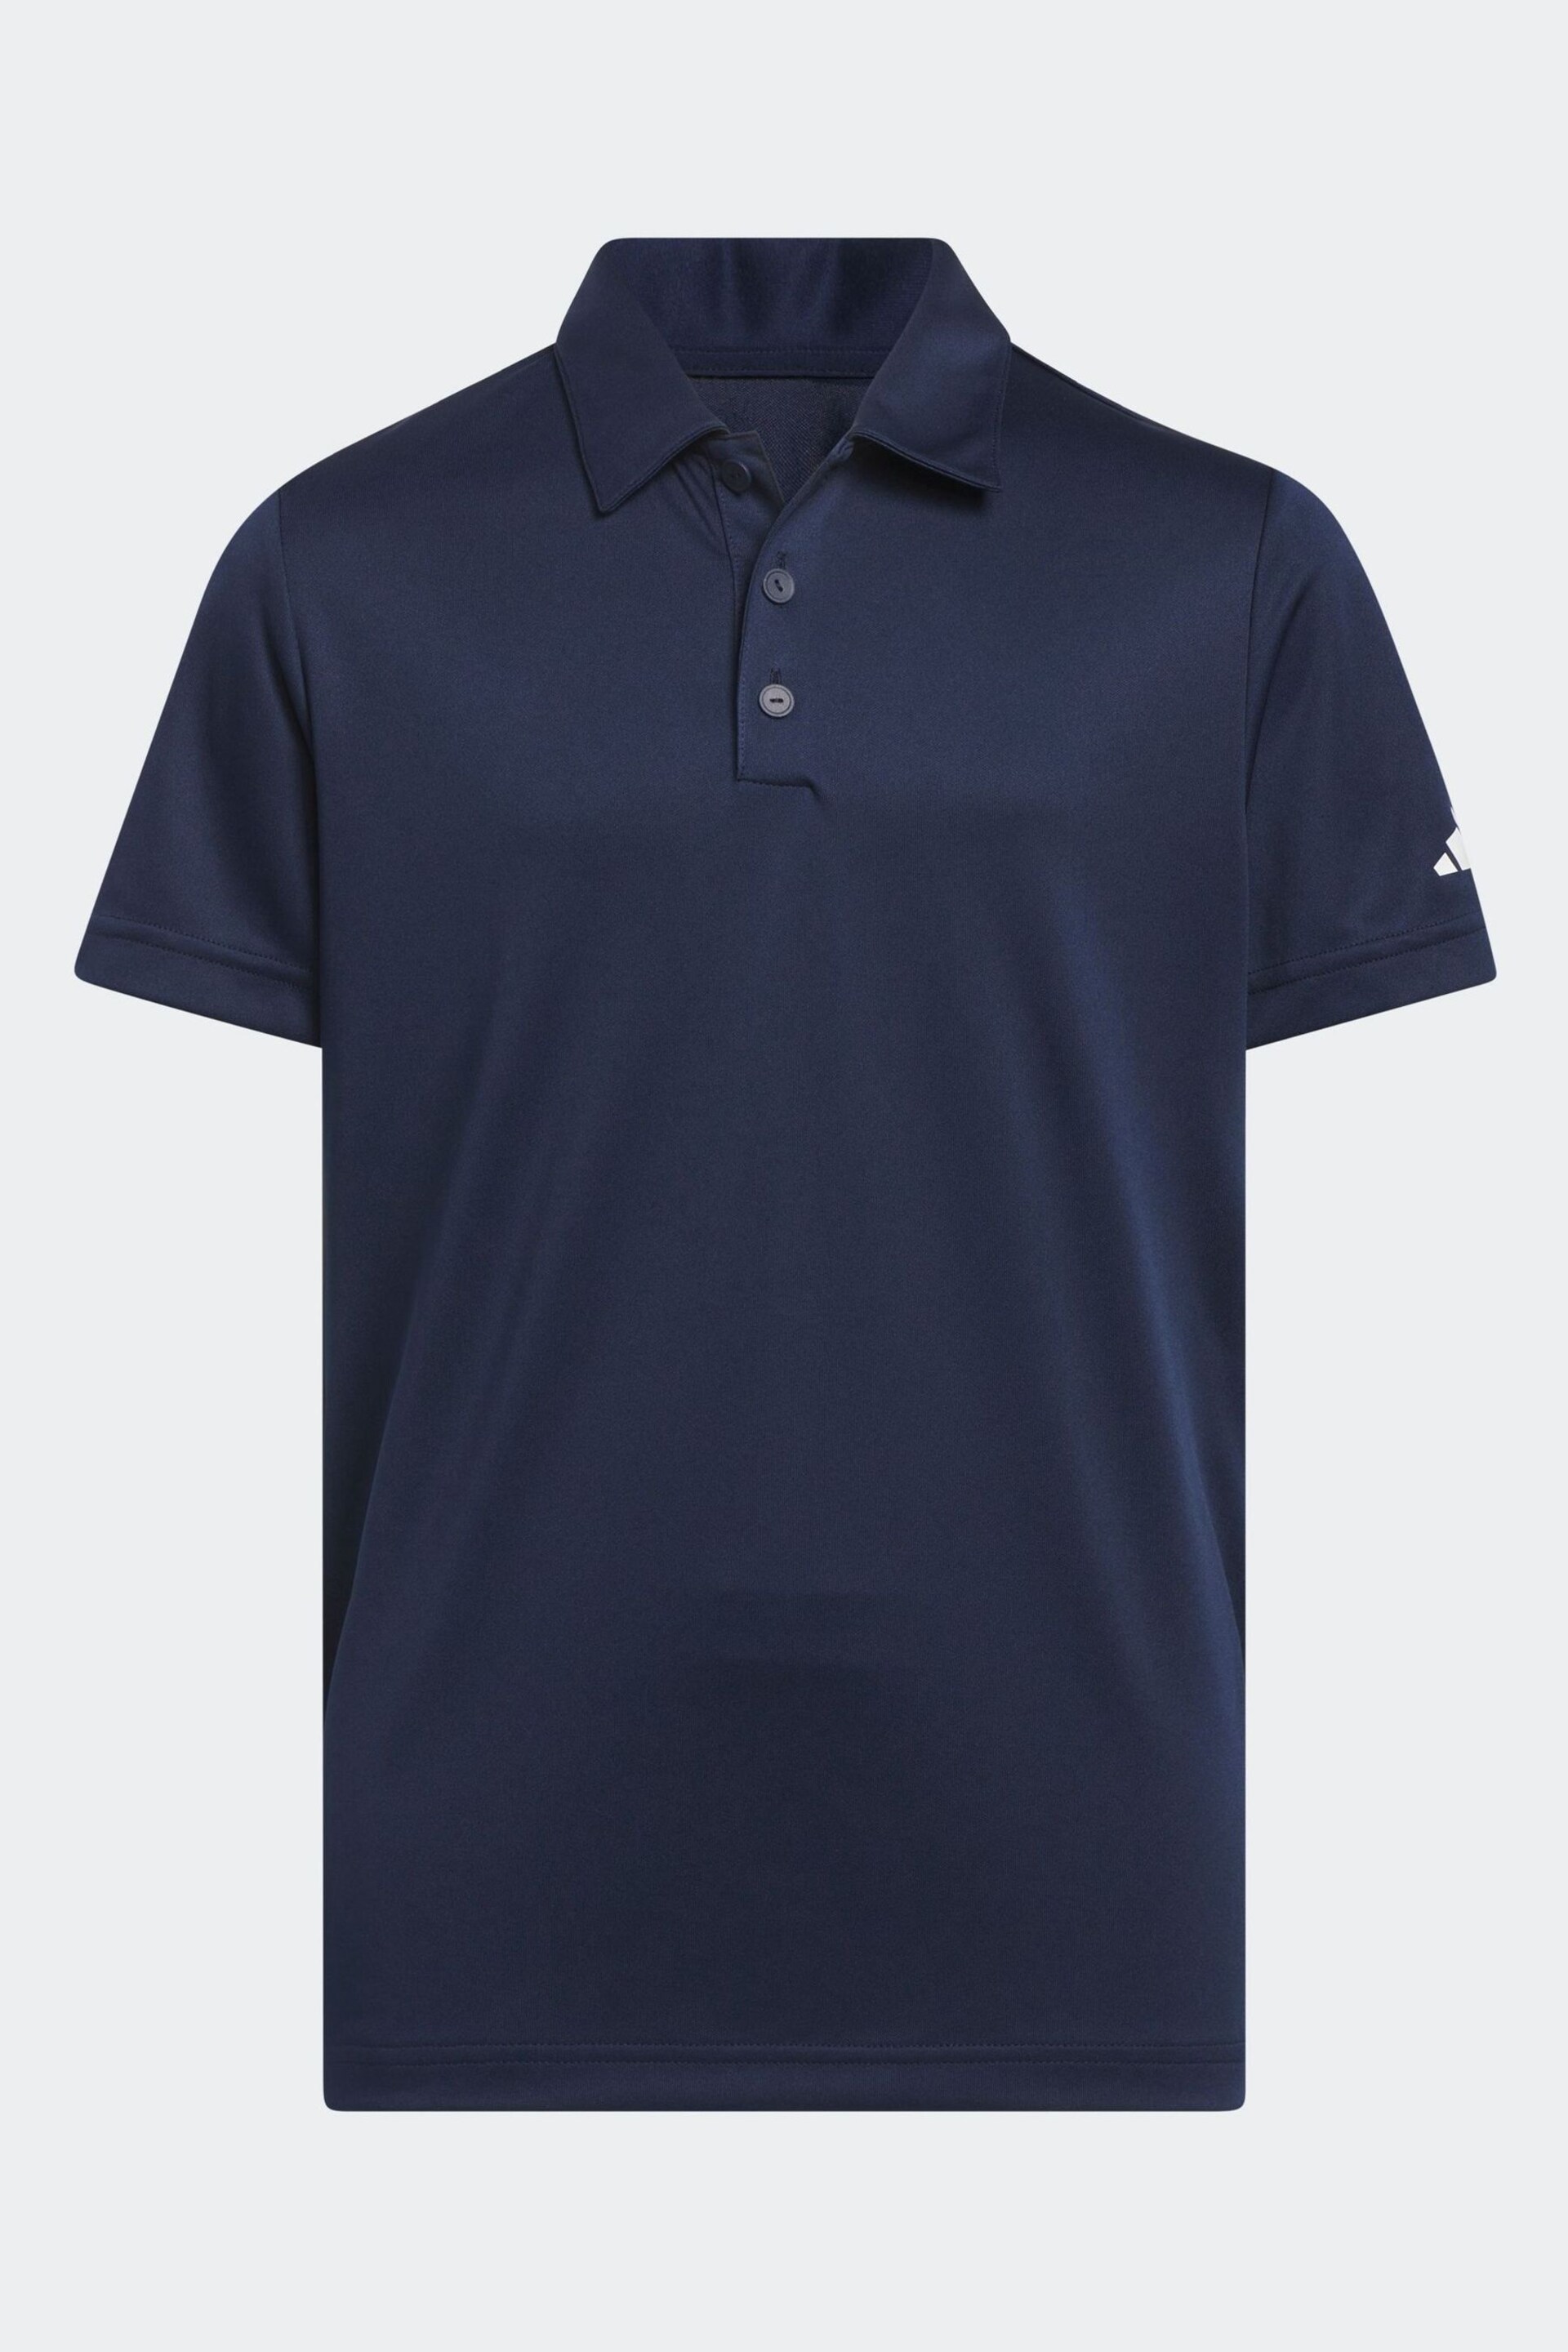 adidas Golf Perf Polo Shirt - Image 1 of 5